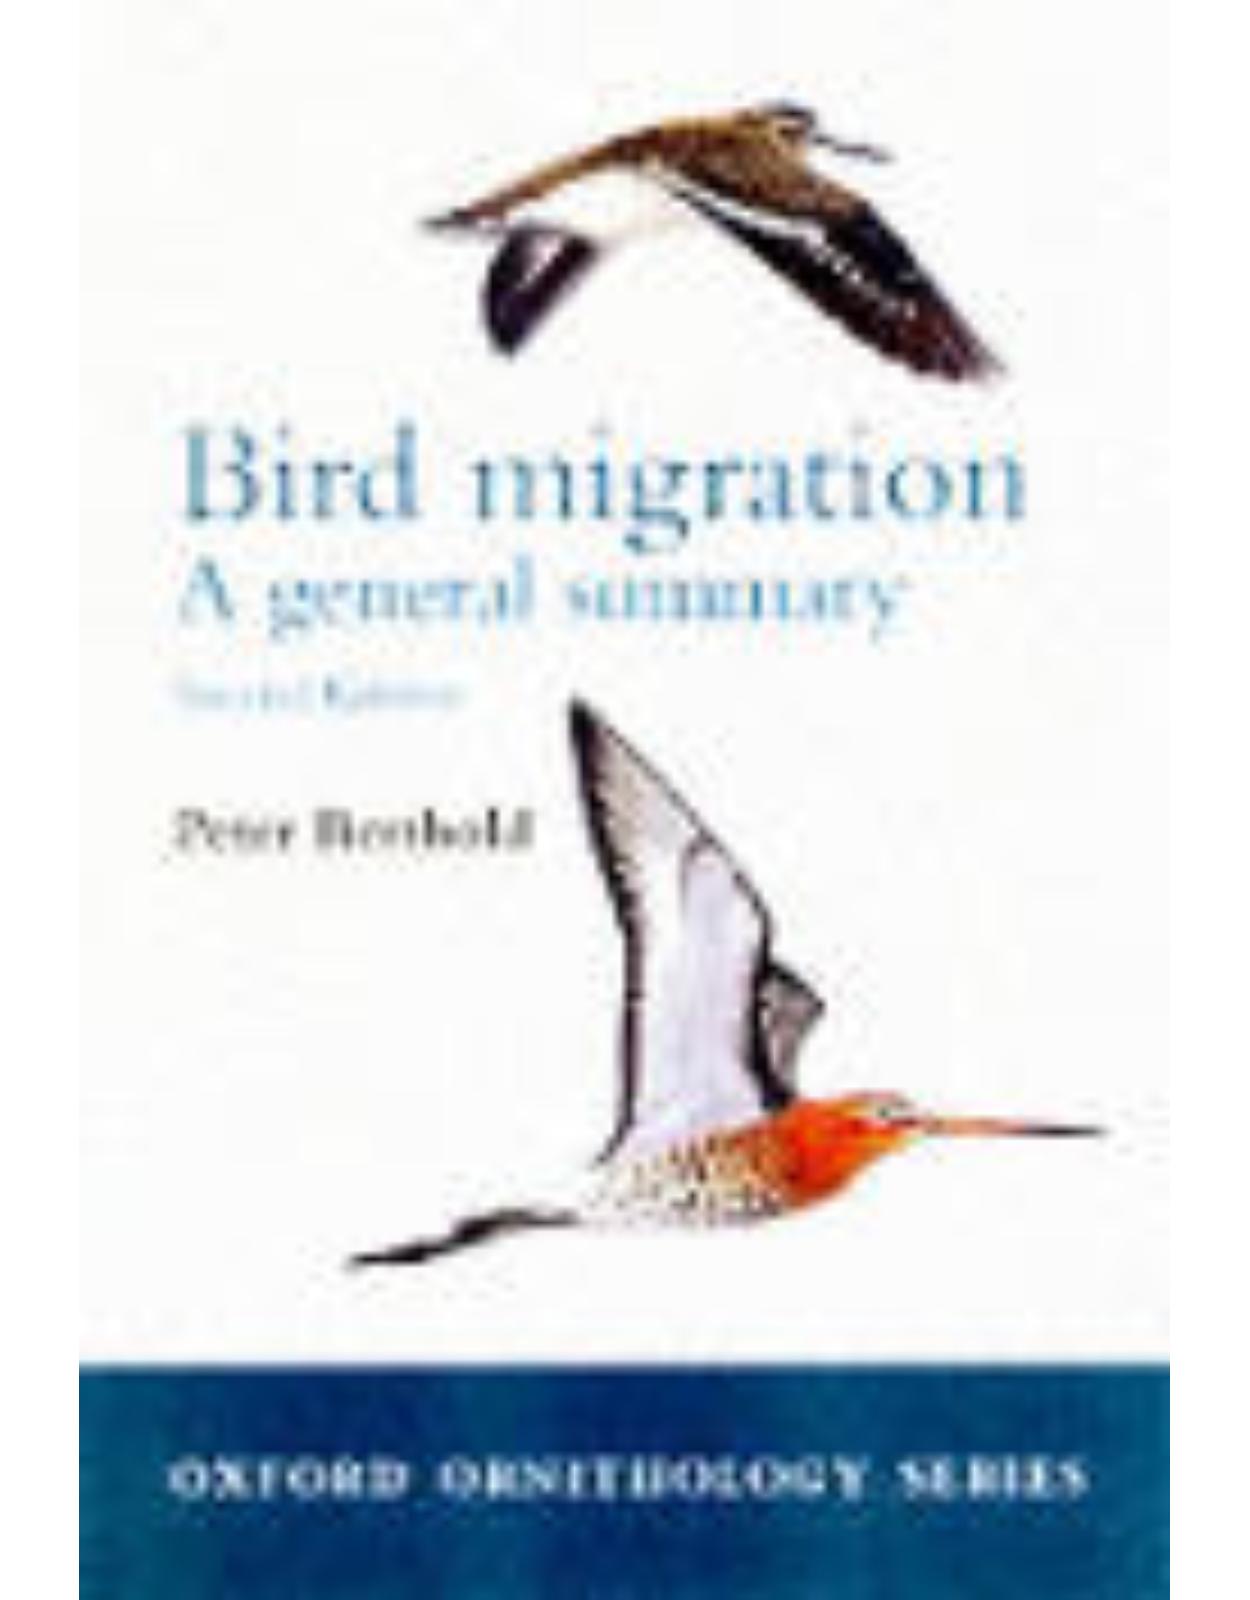 Bird Migration: A General Survey